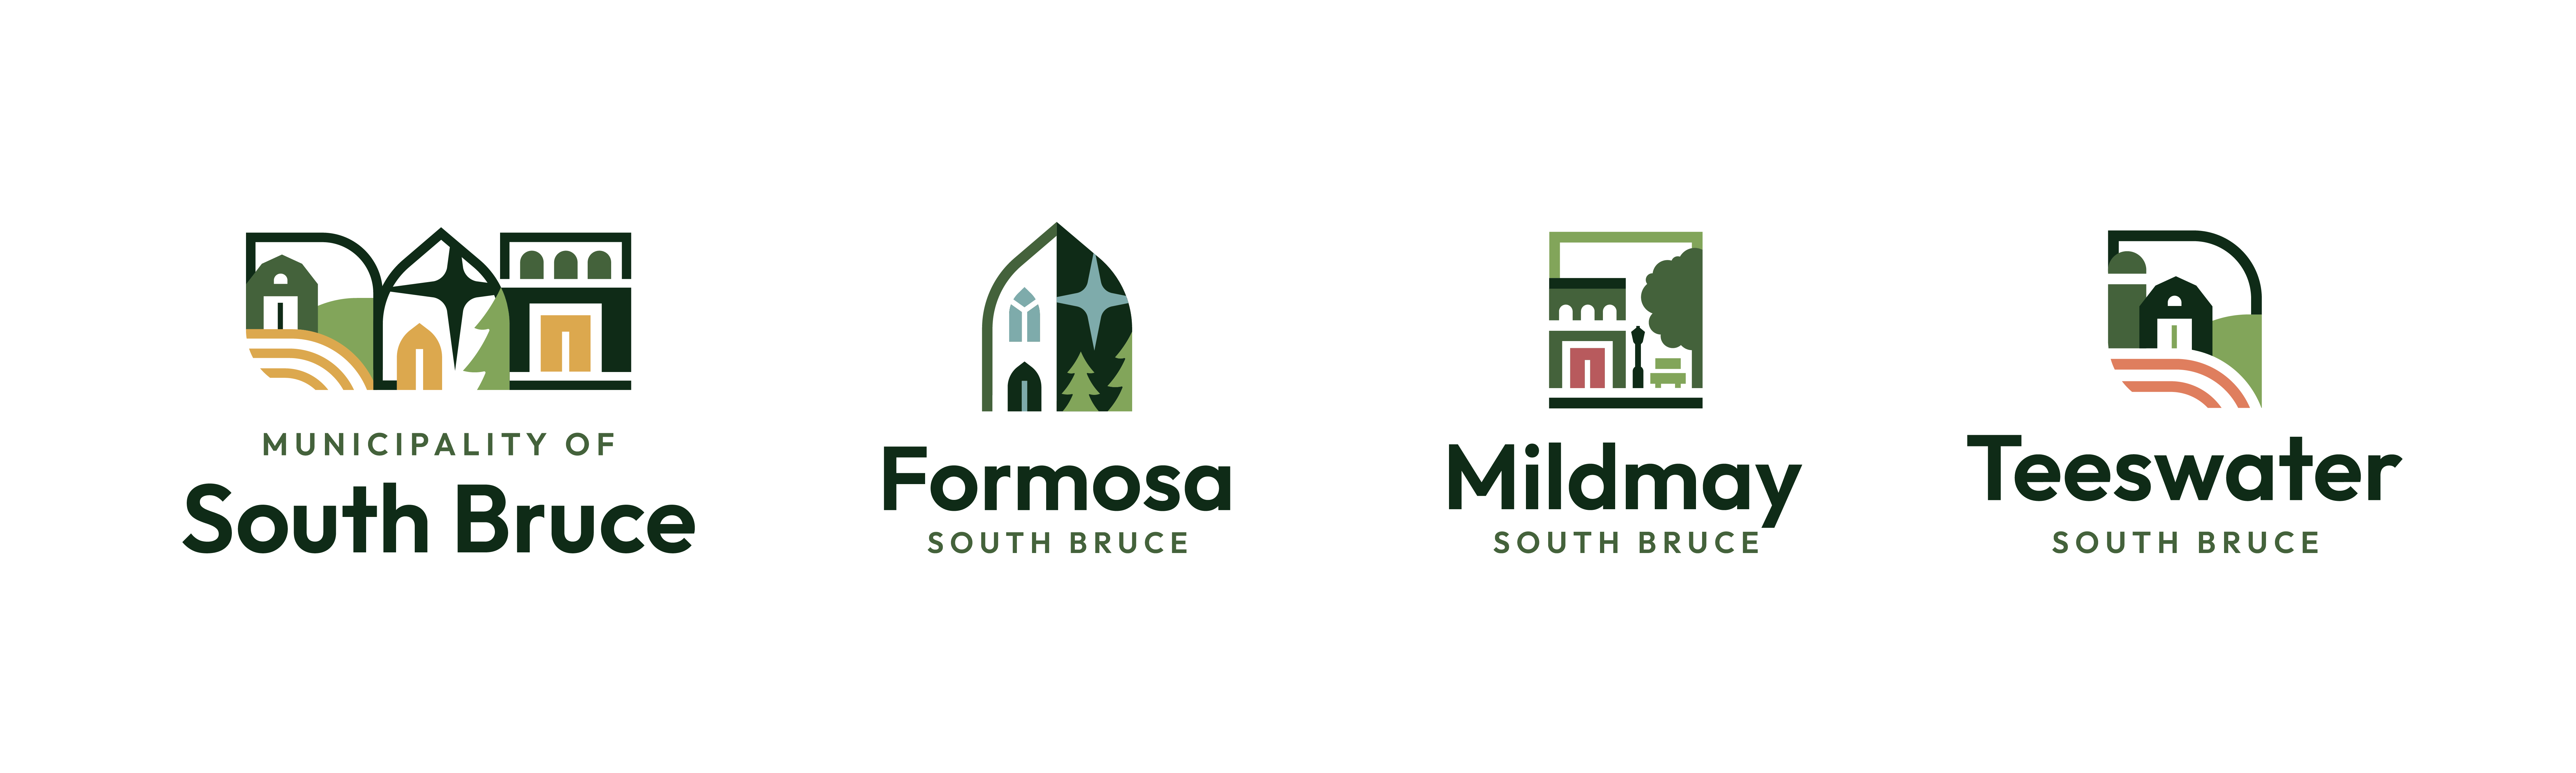 new municipal logo design